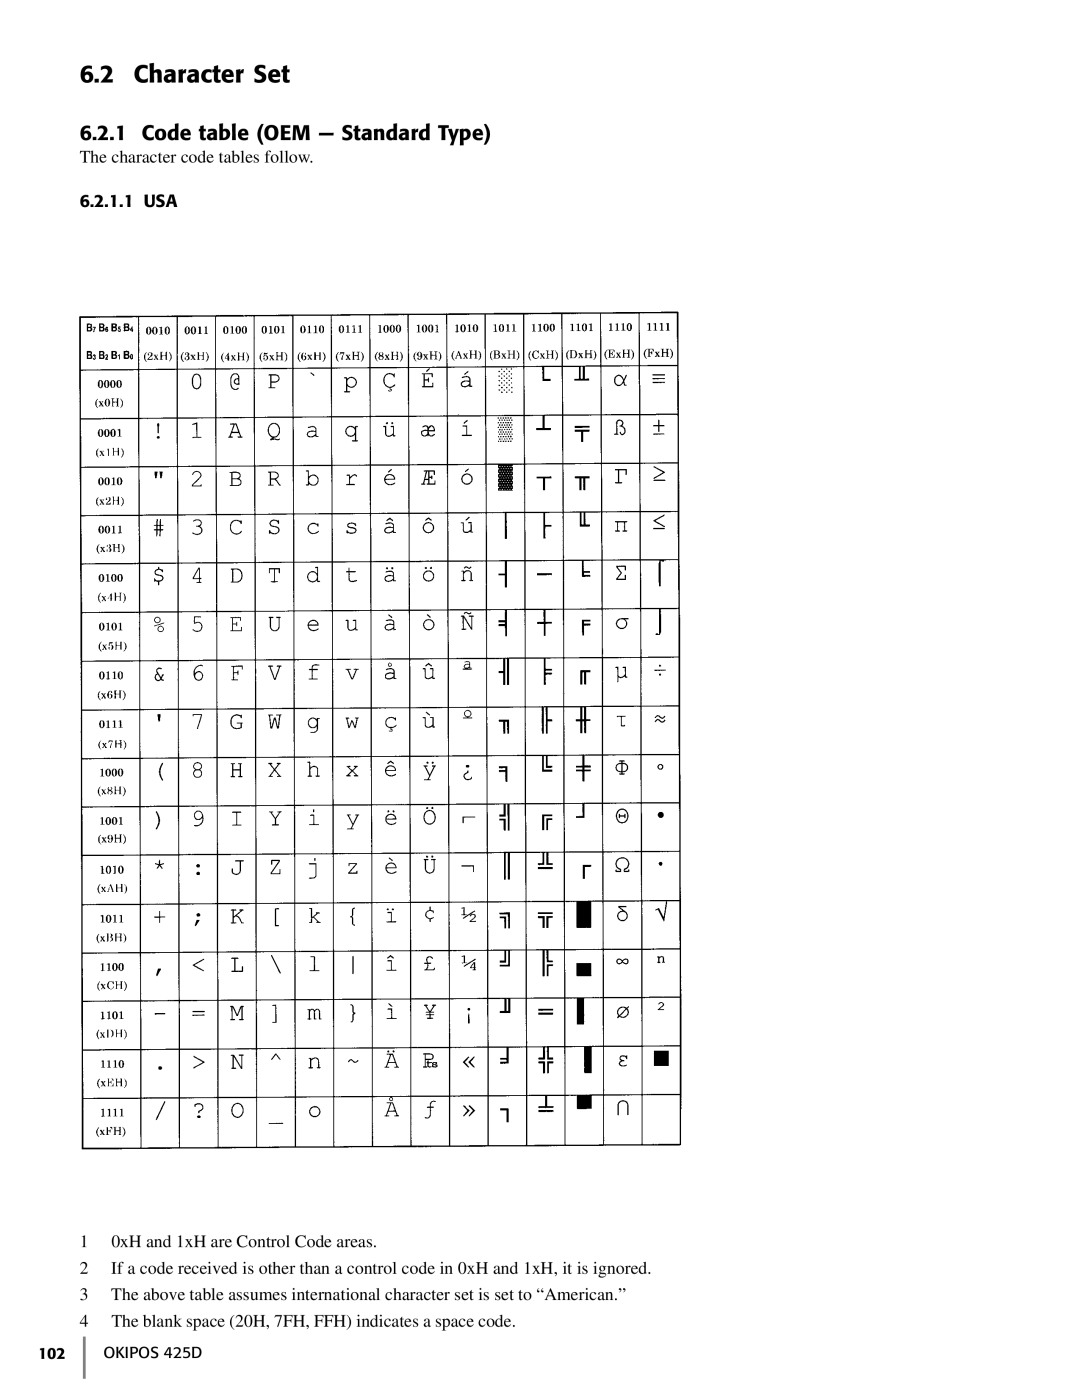 Oki manual Character Set, Code table OEM - Standard Type, 6.2.1.1 USA, OKIPOS 425D 